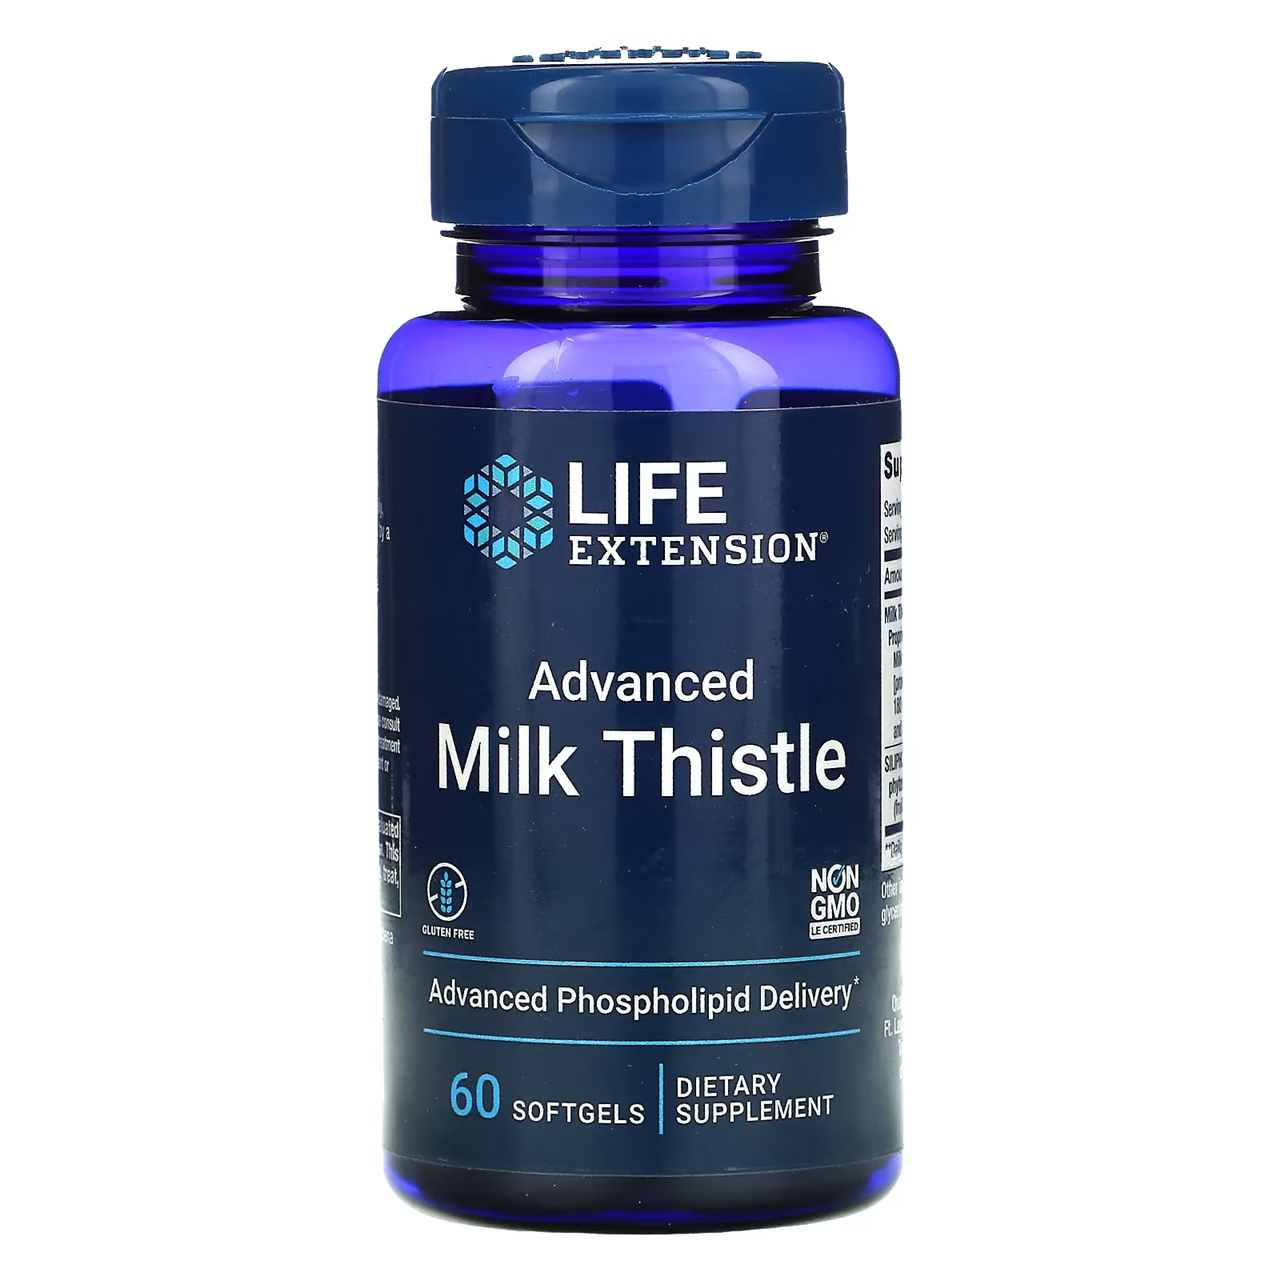 Life Extension Advanced Milk Thistle / 60 softgels